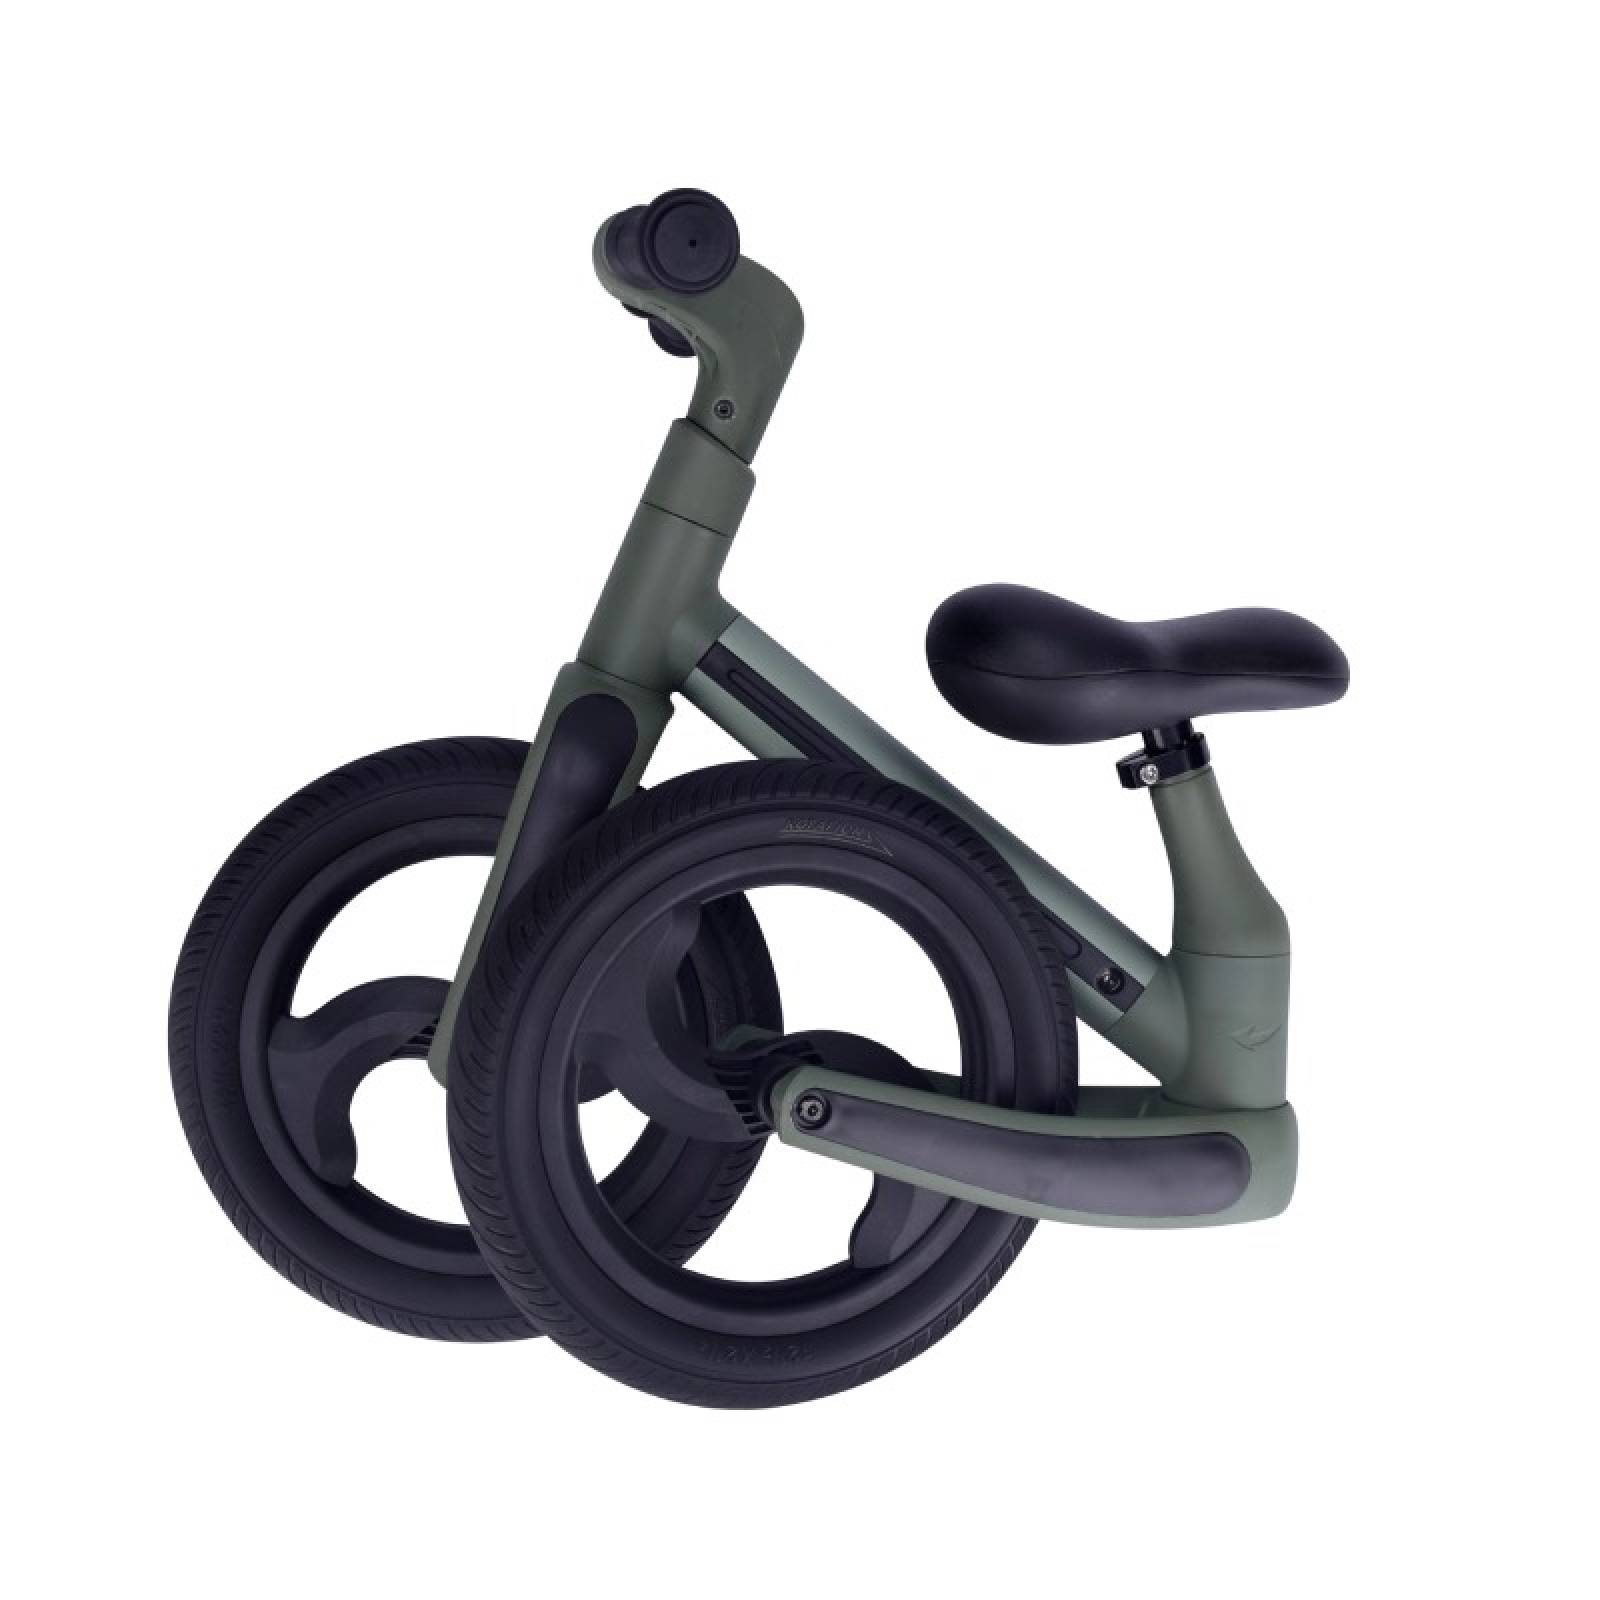 Metal Foldable Balance Bike In Green 2+ thumbnails